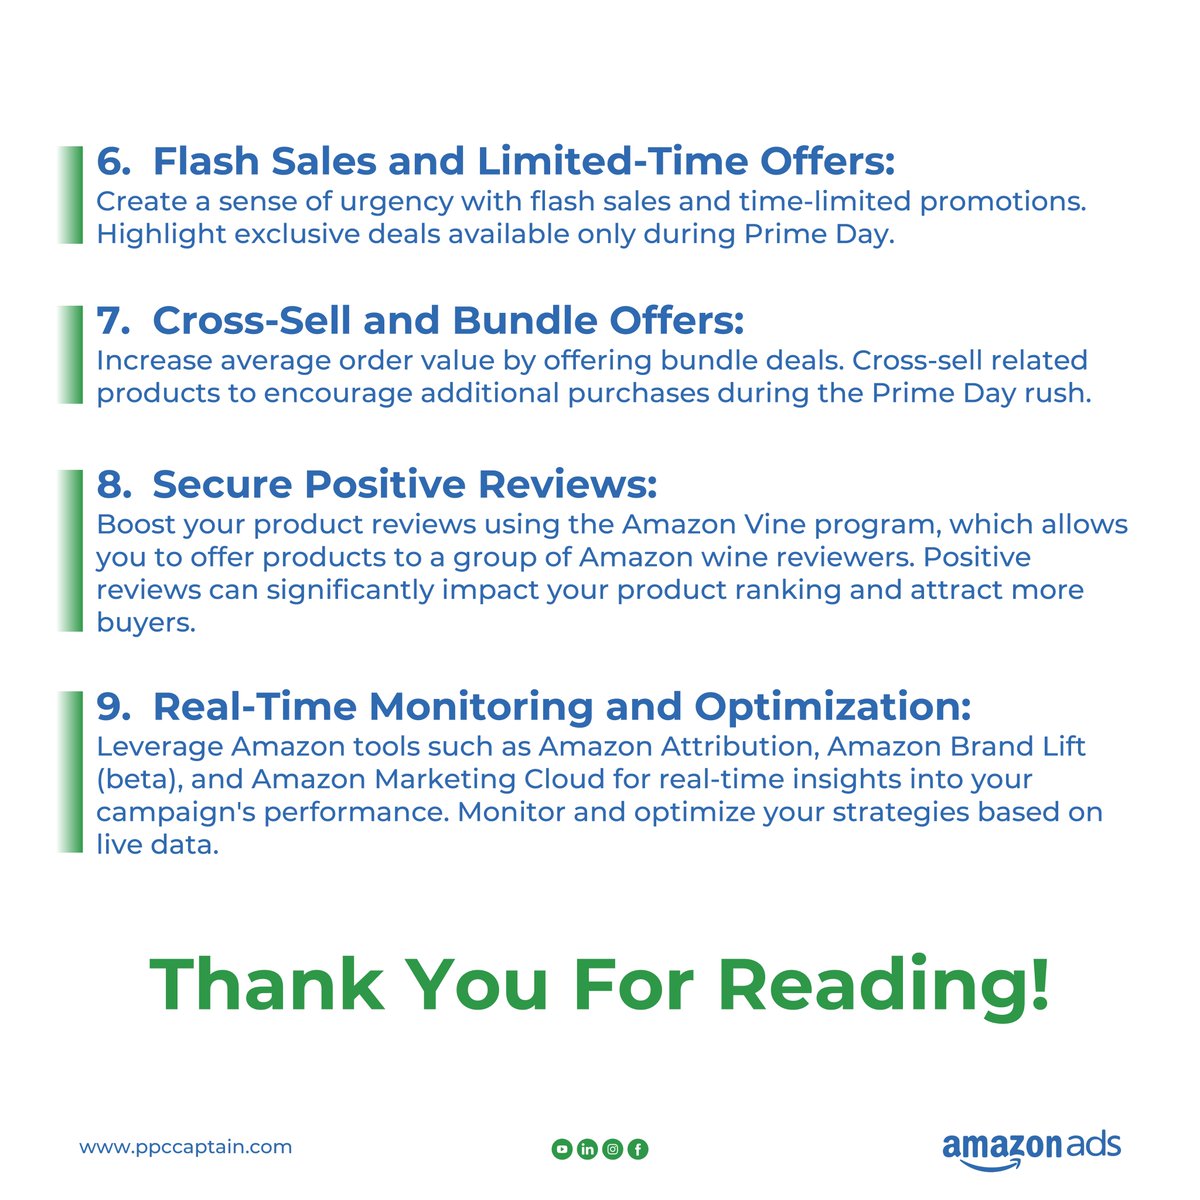 Amazon Strategic Advertising Efforts For Prime Day Success! Strategies No 6

#AmazonPrimeDay #AmazonSellers #AmazonAdvertising #AmazonTipsandTricks #AmazonPPCManager #AmazonVA #AmazonConsultant #AmazonVirtualAssistant #AmazonAdvertising #PPCCaptain